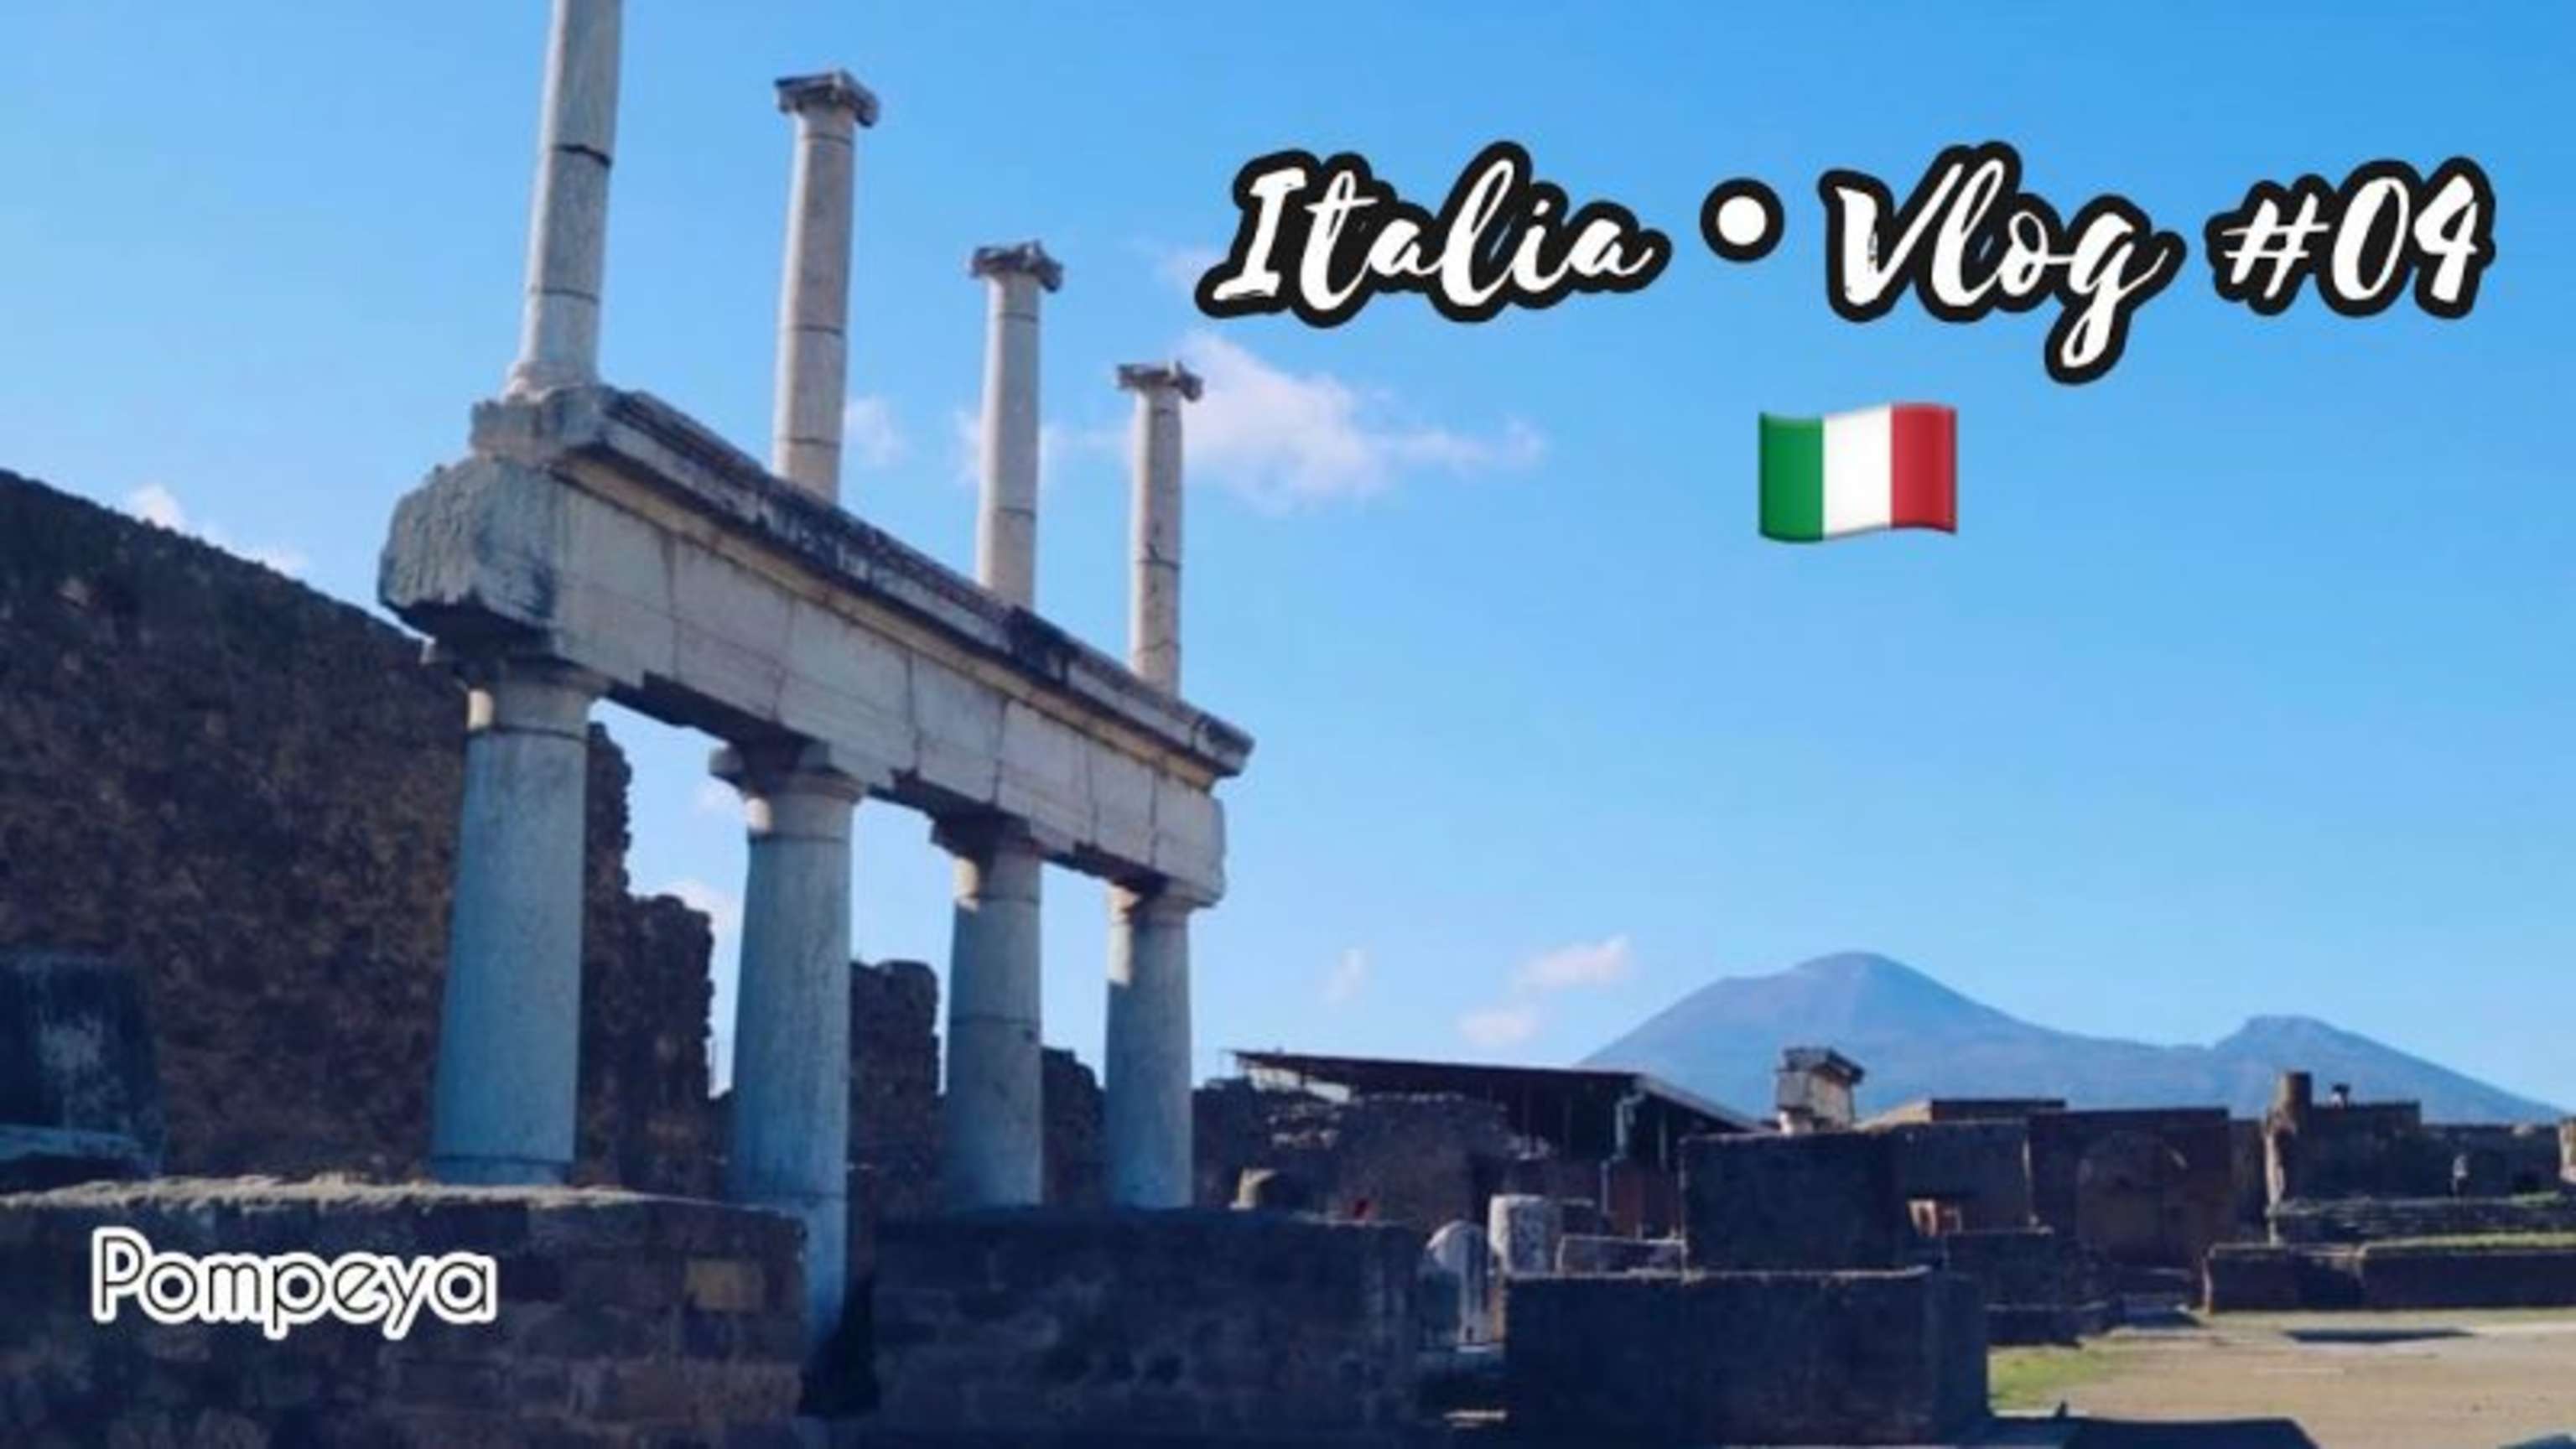 Recorriendo las ruinas de Pompeya, al pie del Vesubio 🇮🇹 | ITALIA VLOGS #04